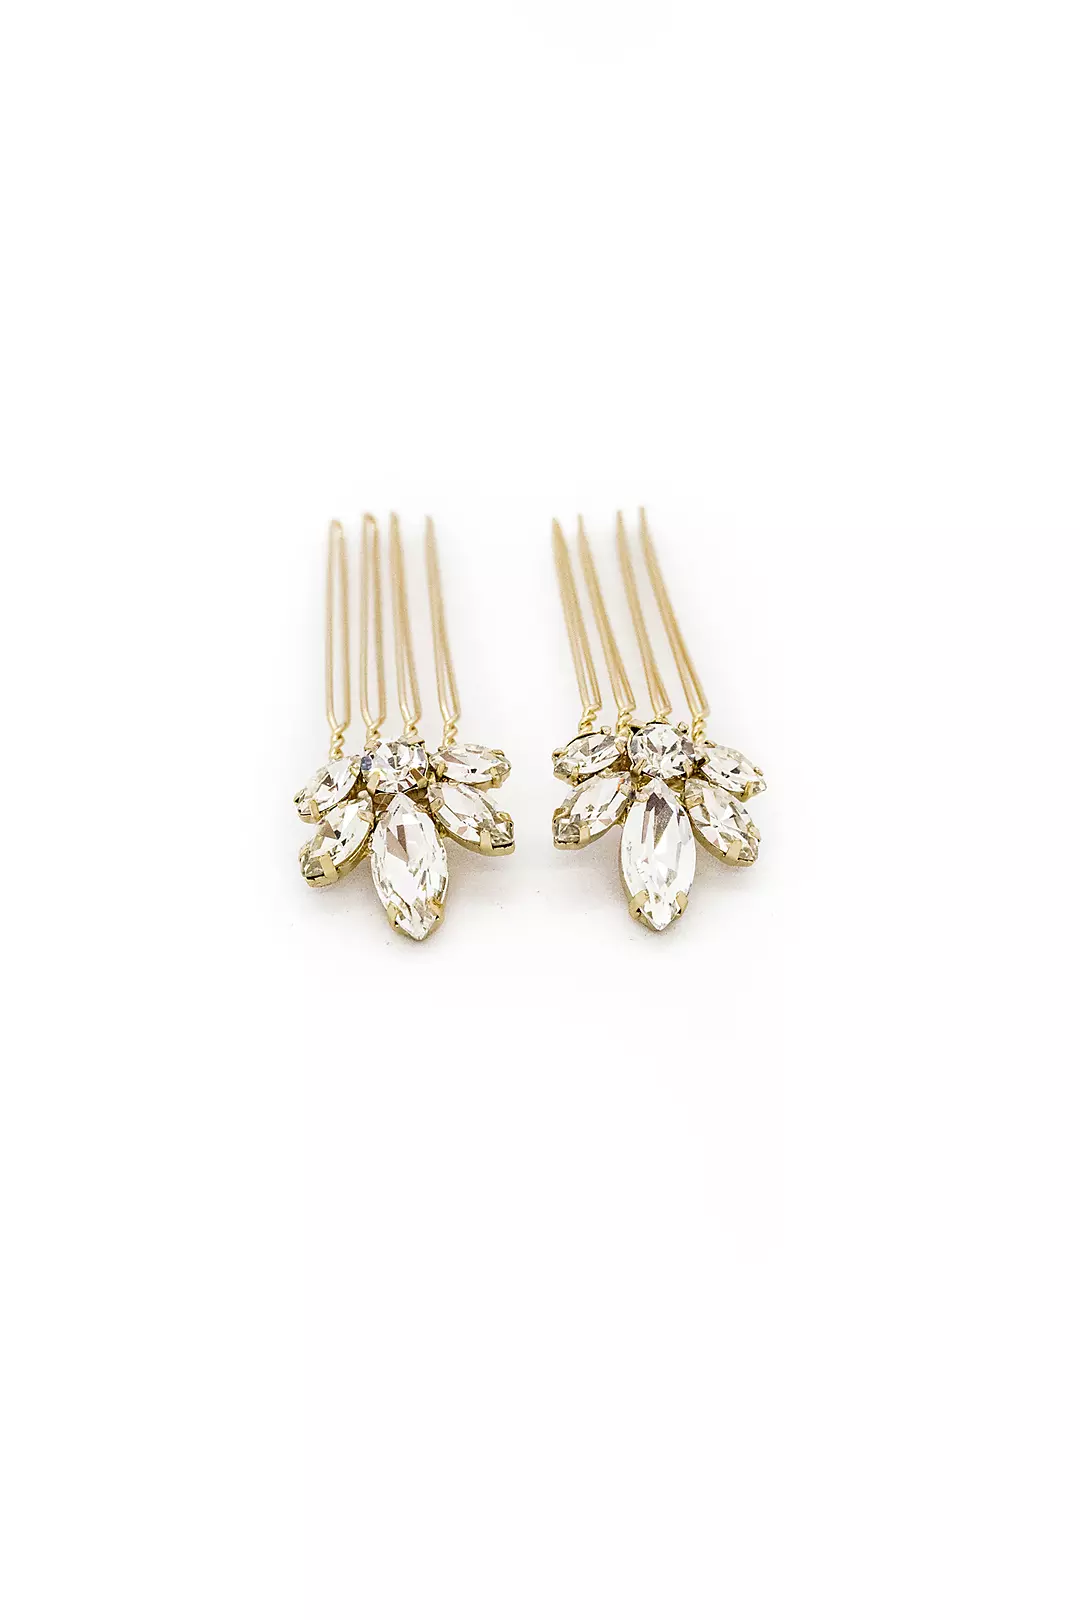 Swarovski Crystal Marquise Flower Mini Comb Set Image